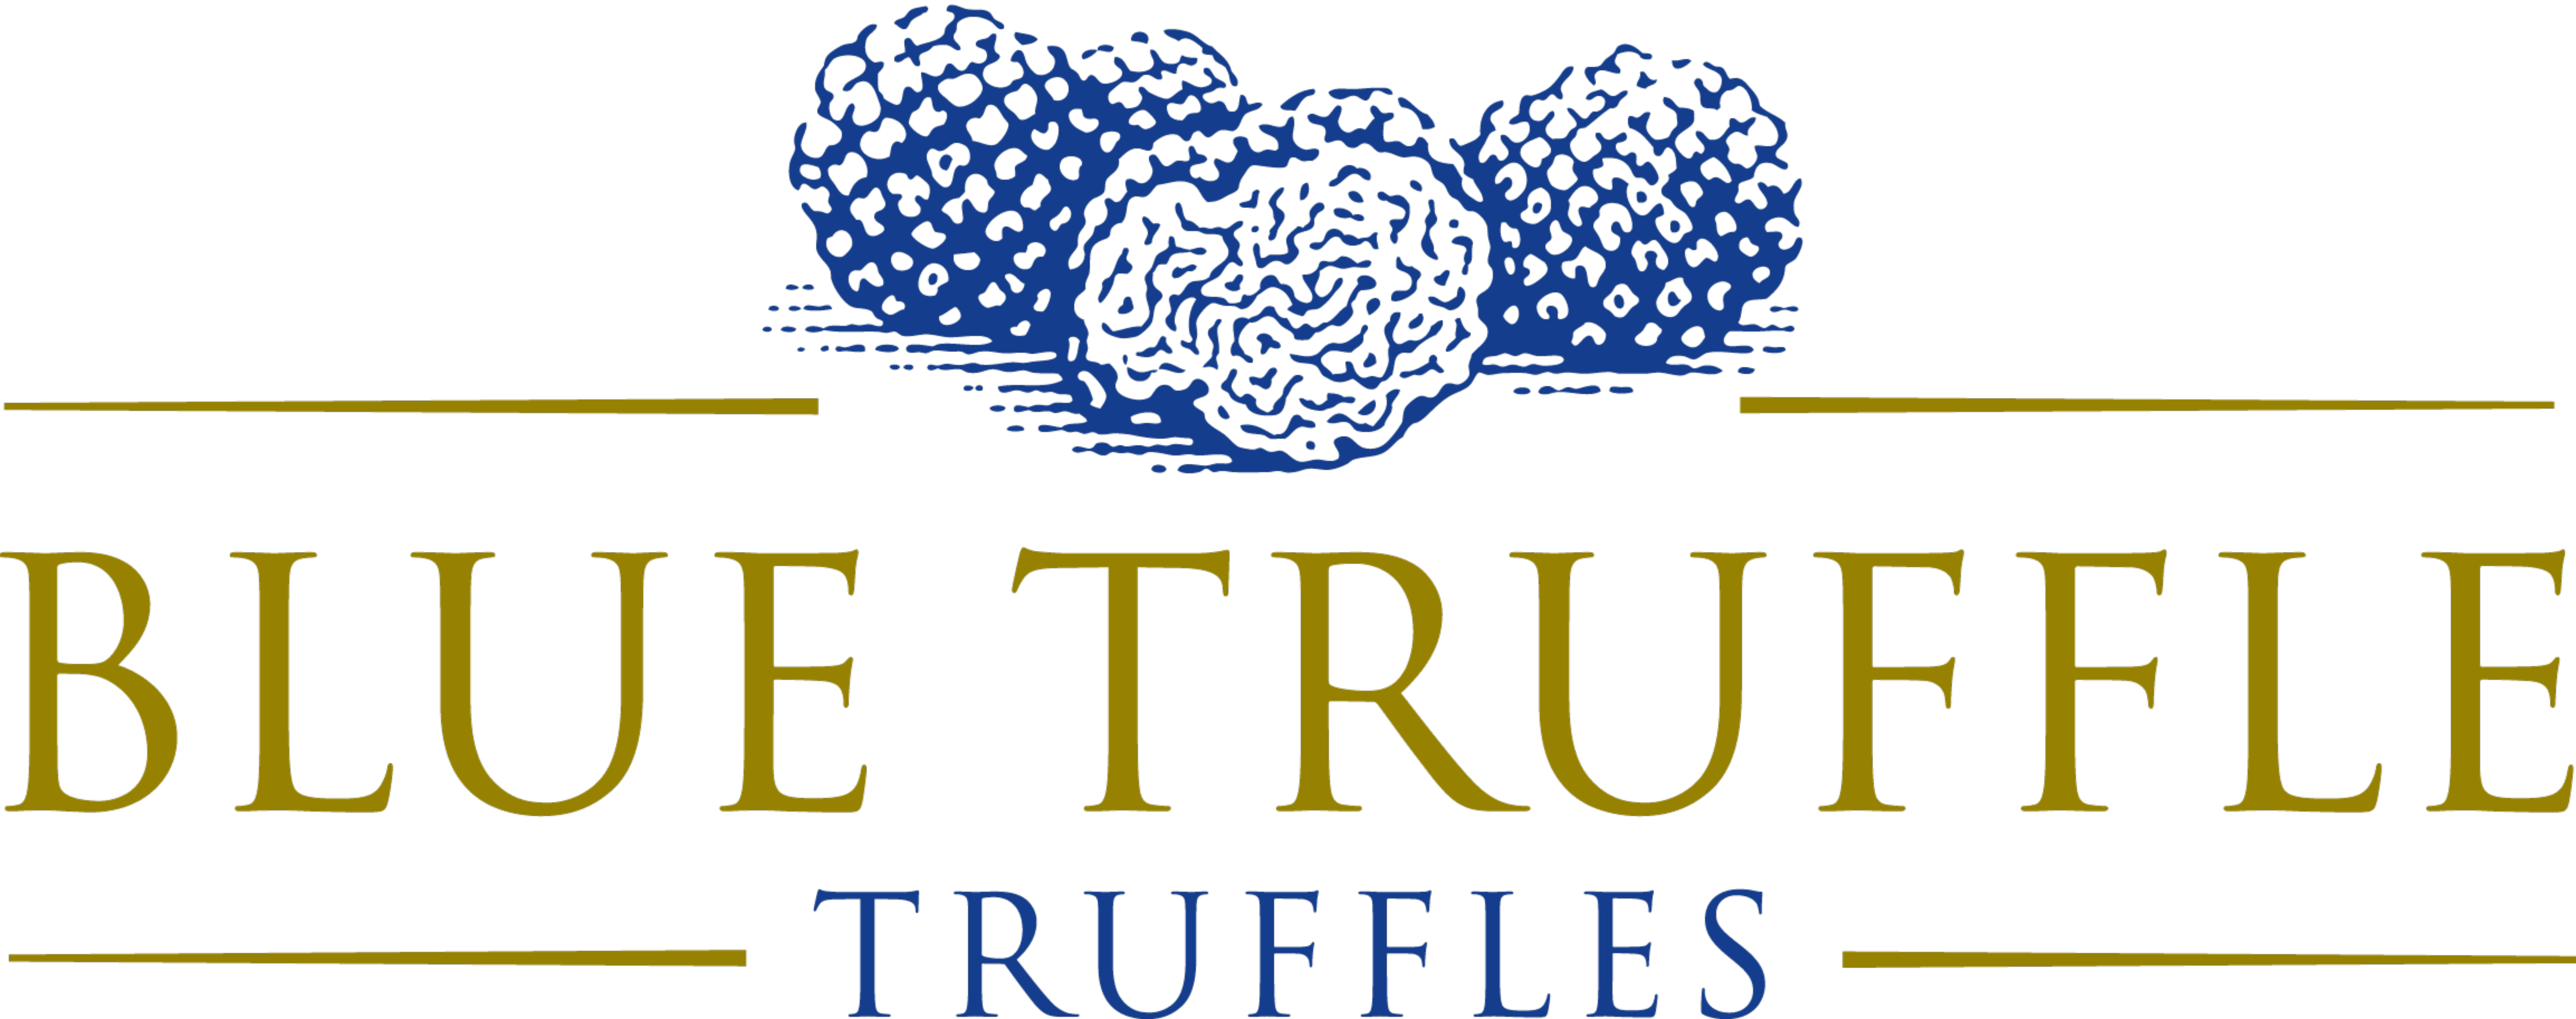 Blue Truffle Truffles